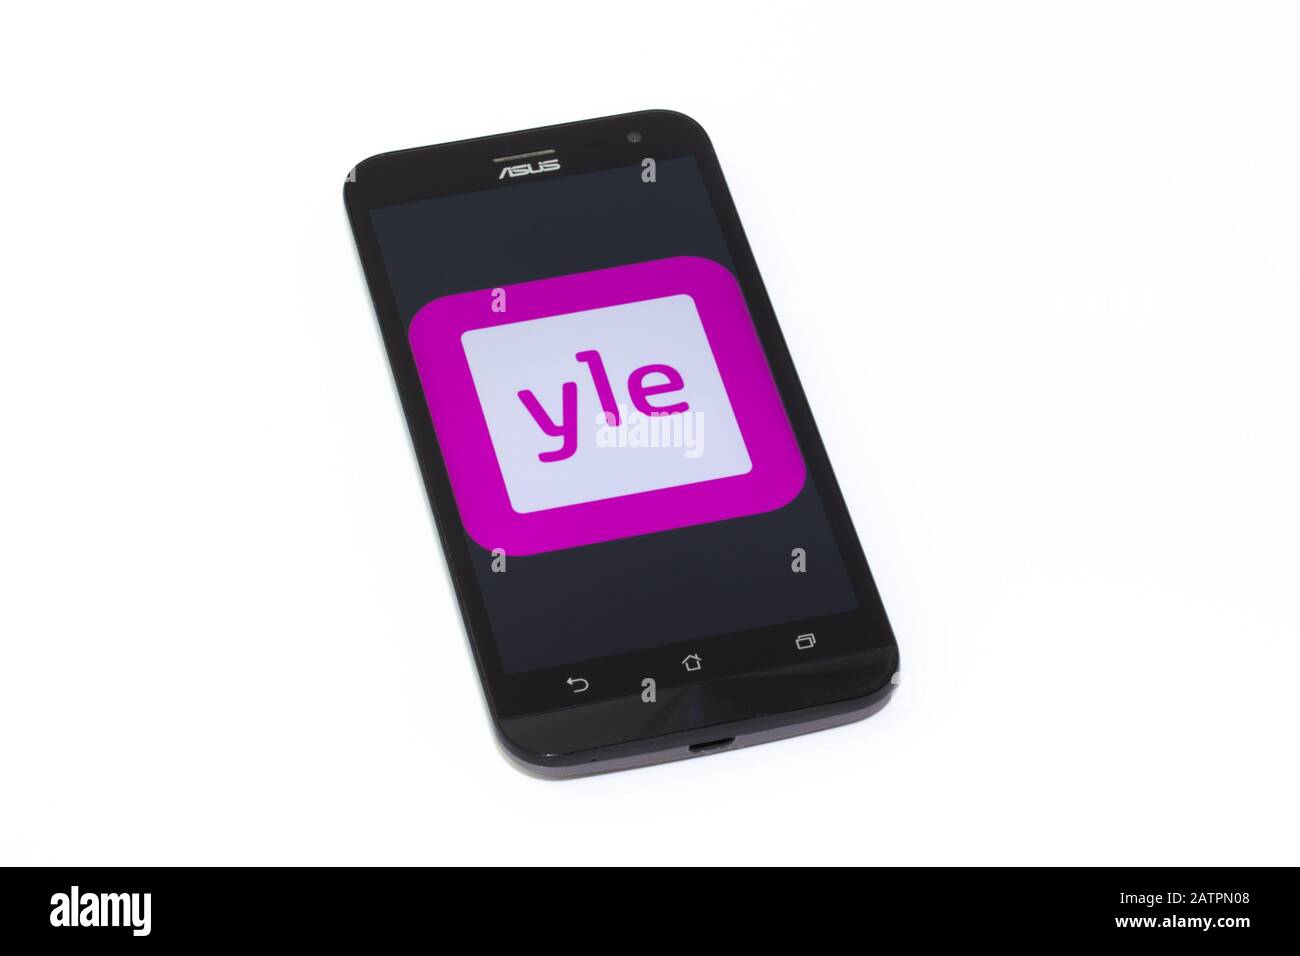 Kouvola, Finland - 23 January 2020: Yle app logo on the screen of smartphone Asus Stock Photo